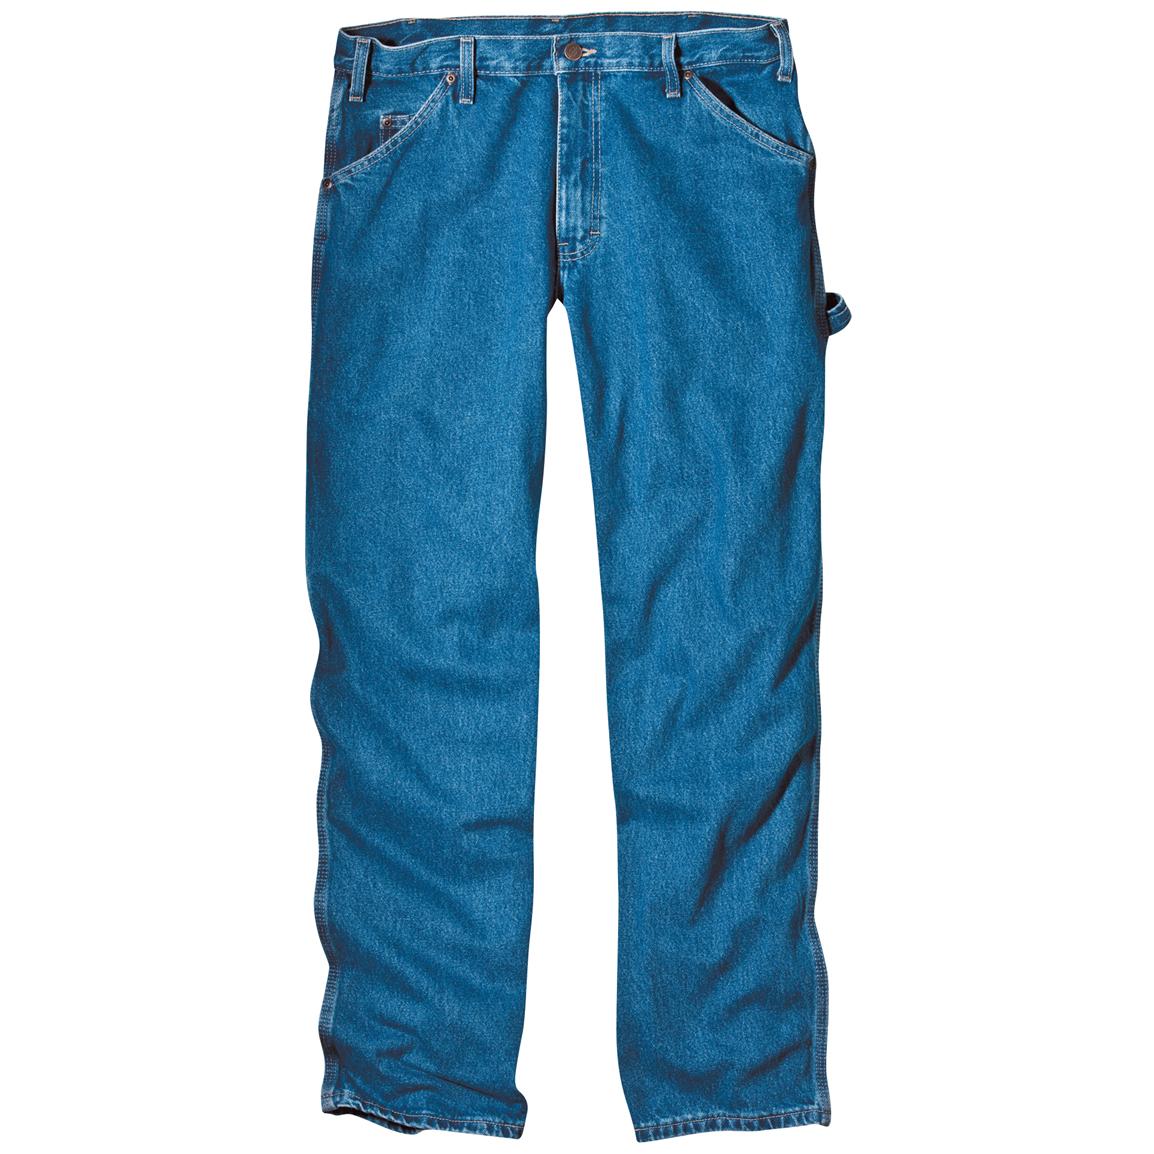 Blue Jeans Clip Art At Clker 